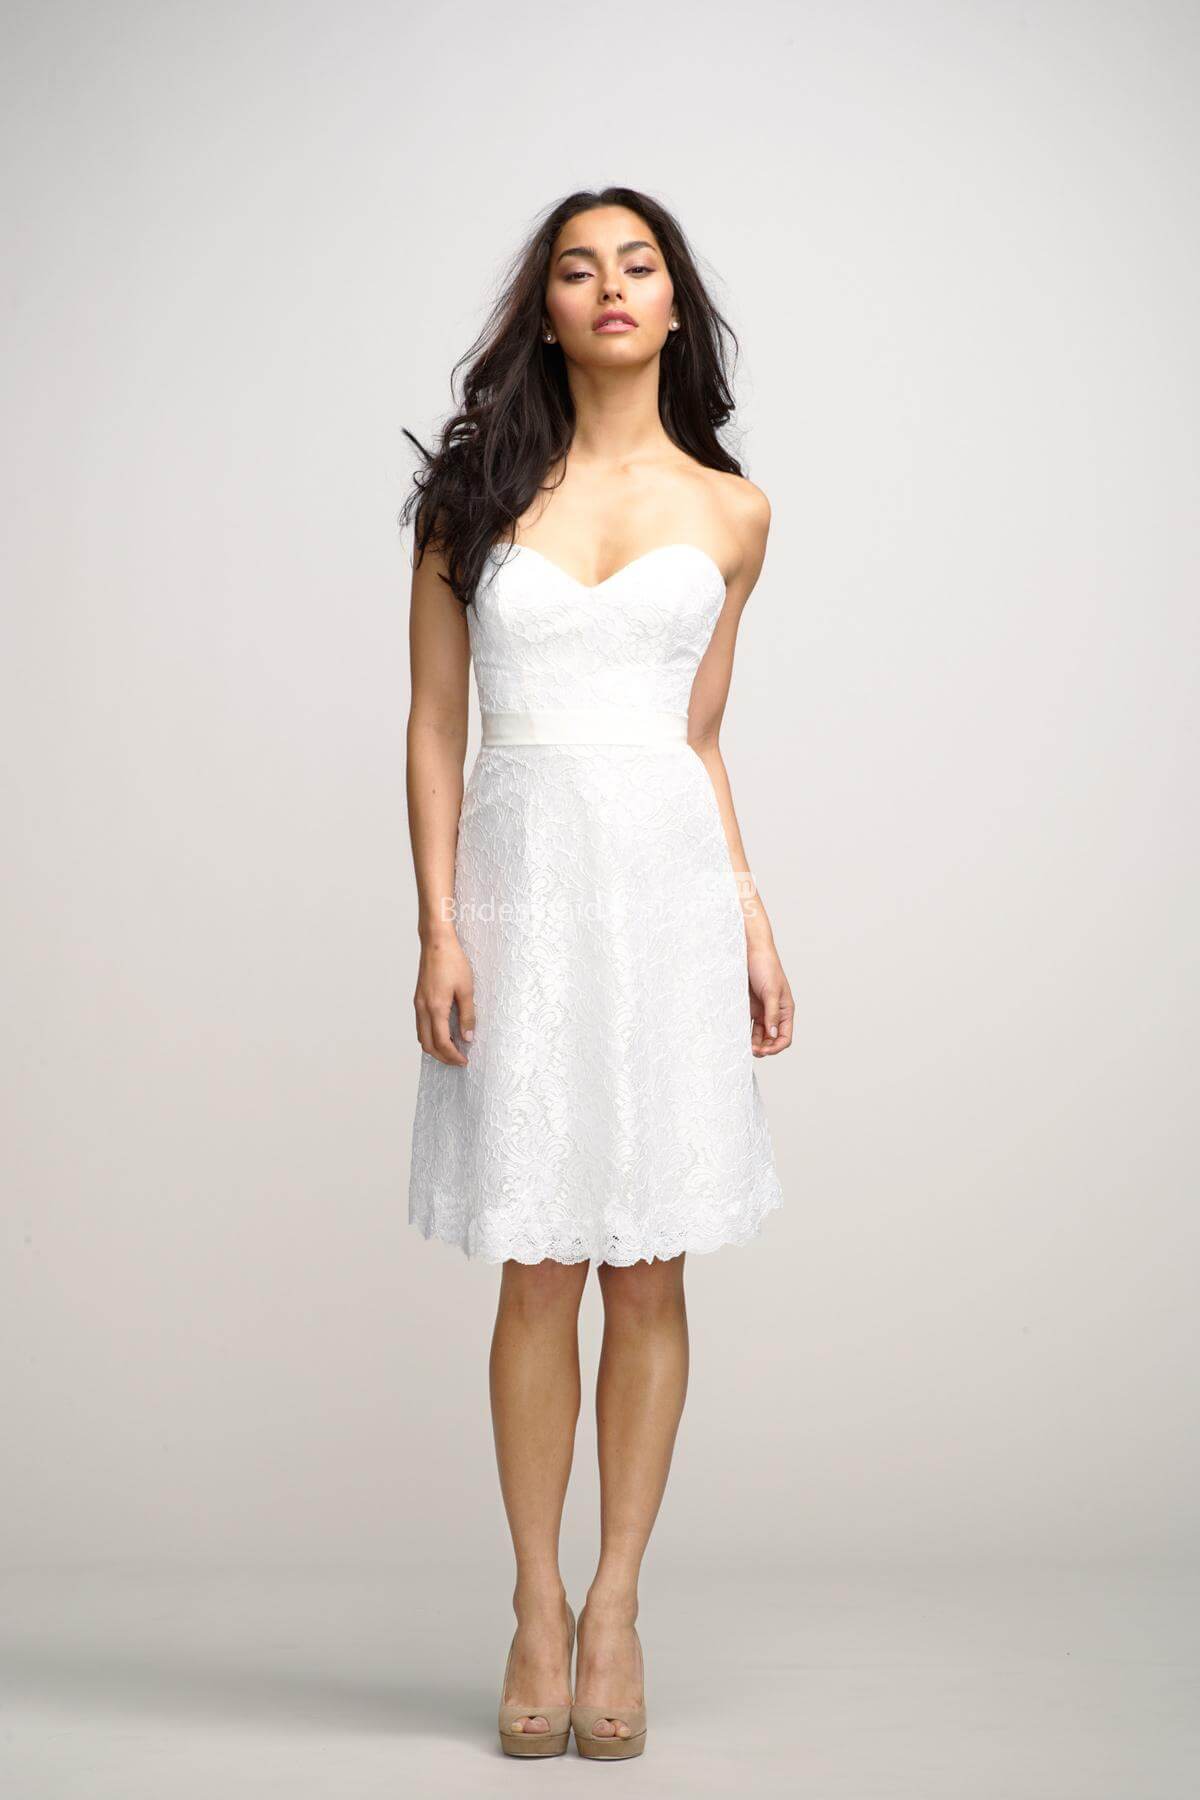 Buying White Strapless Dress Online